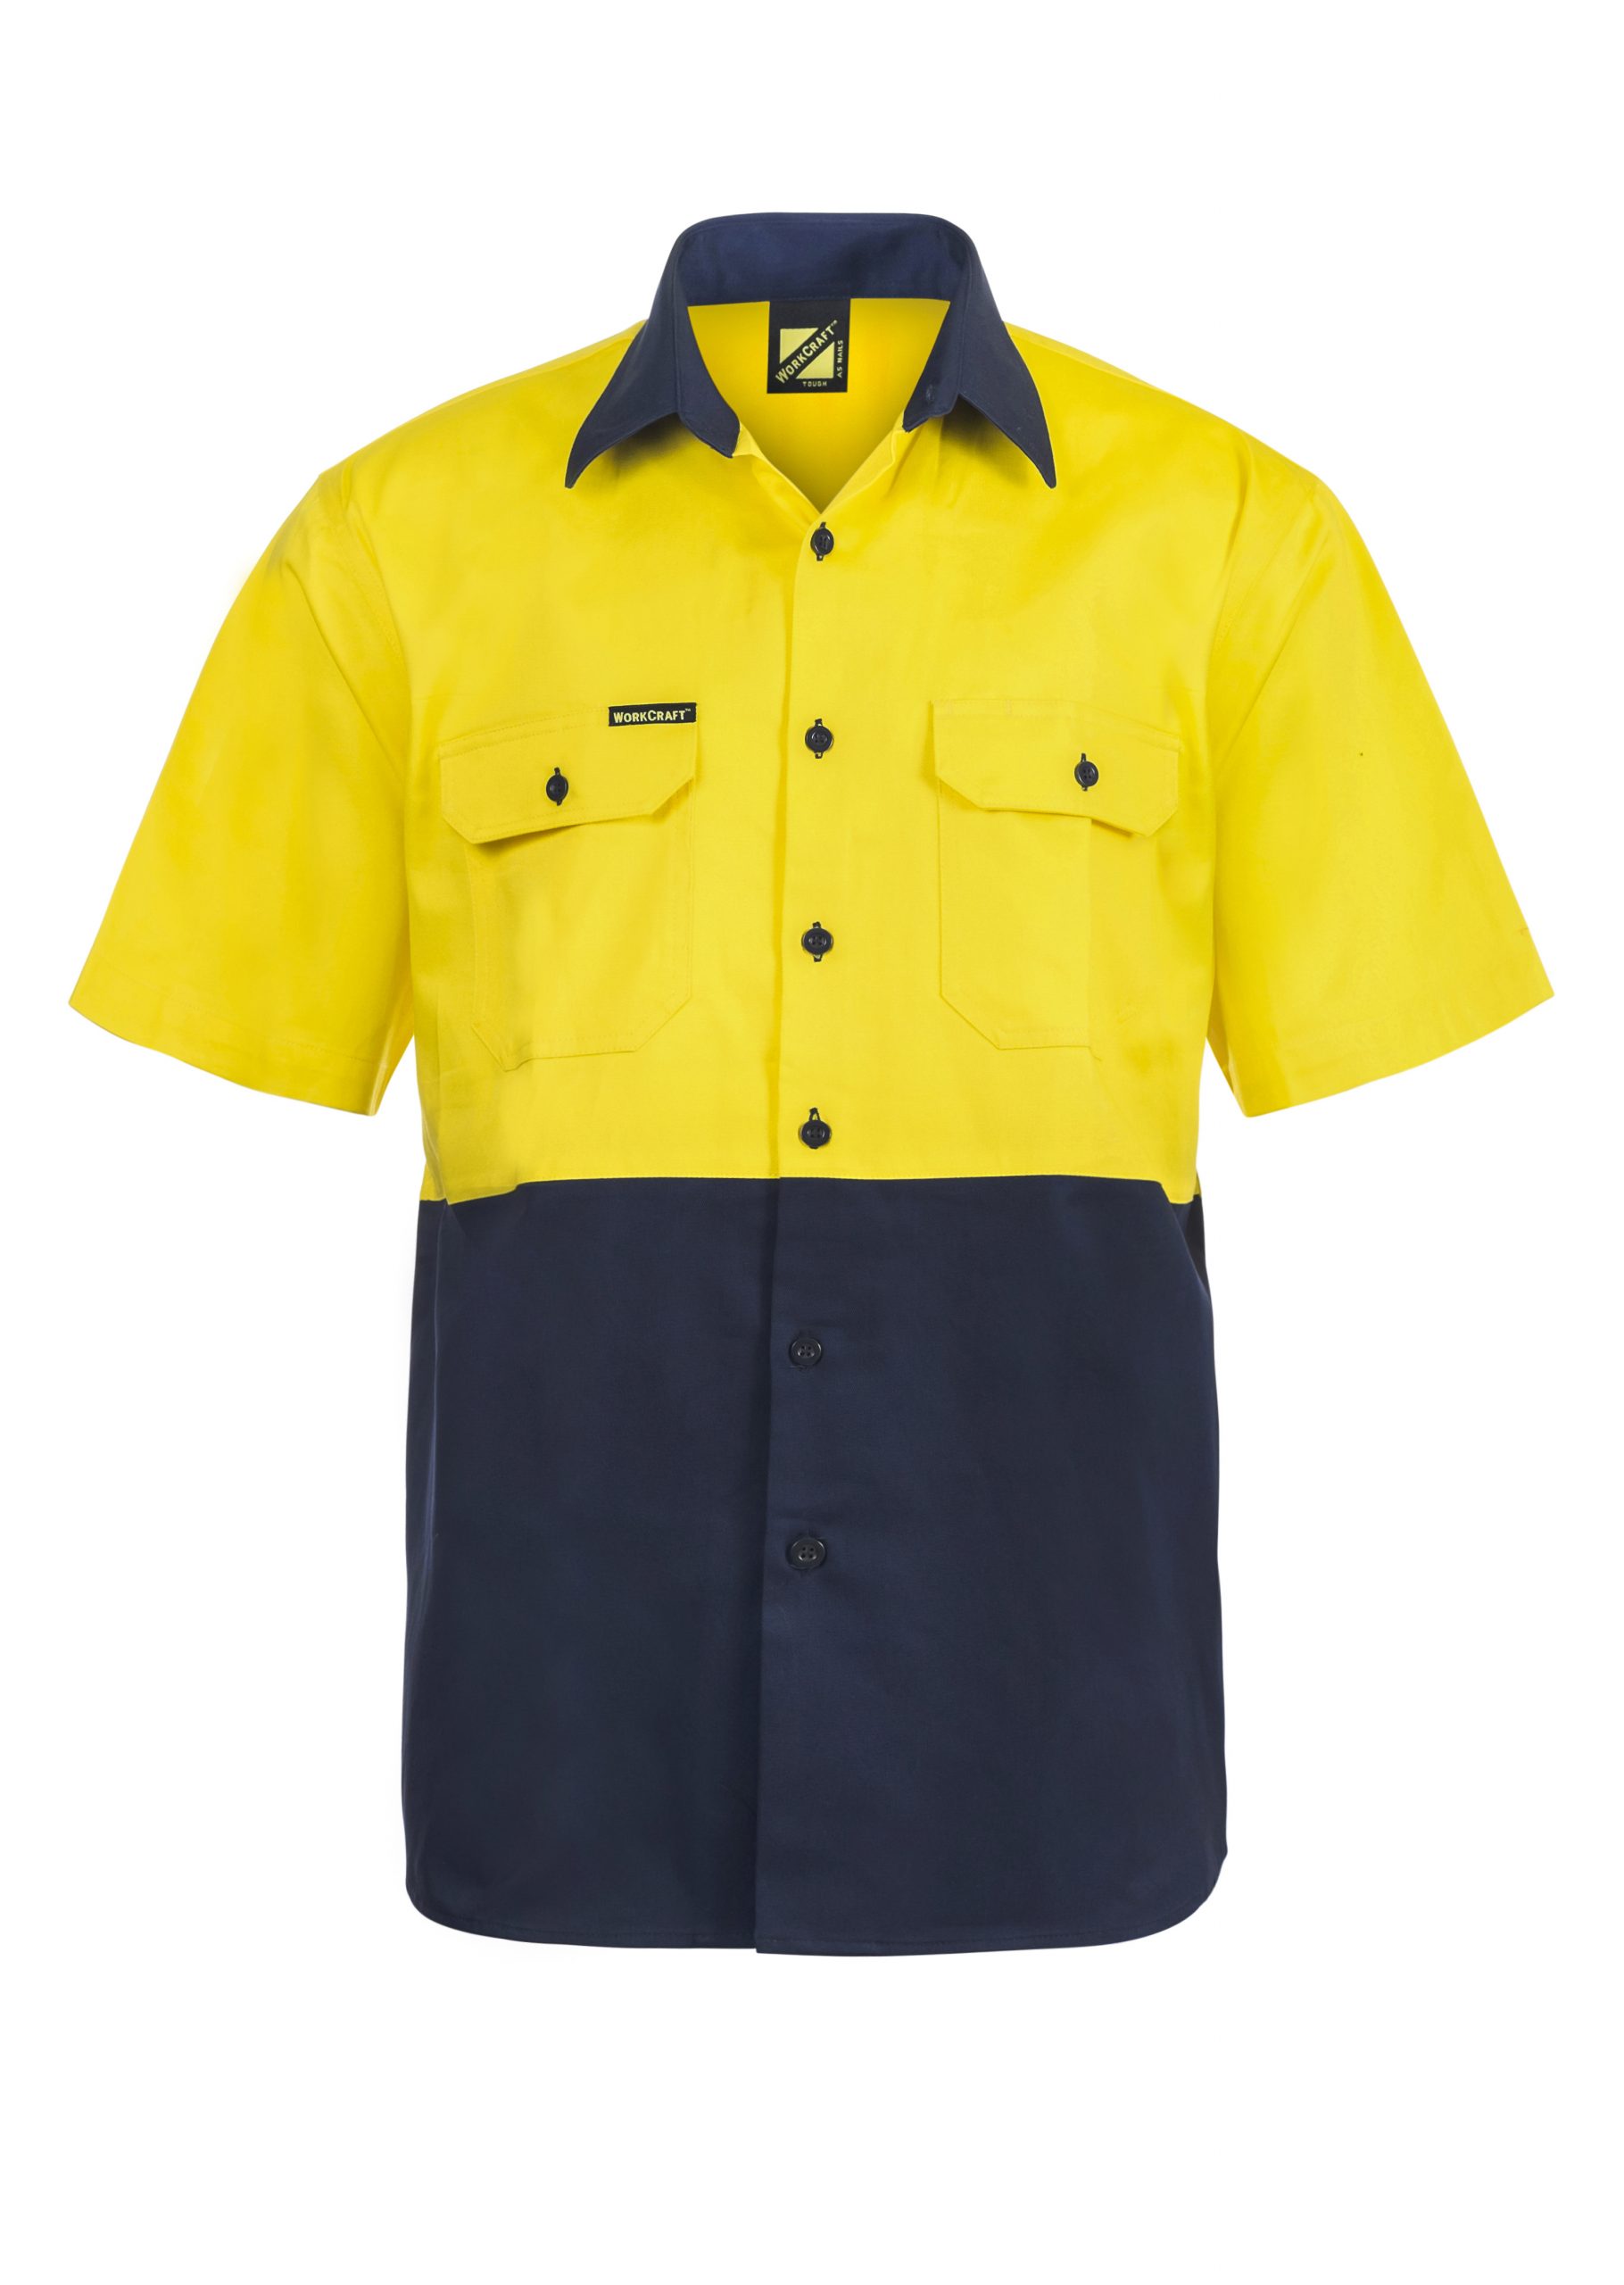 WS3023 Hi Vis Two Tone Short Sleeve Cotton Drill Shirt NY1